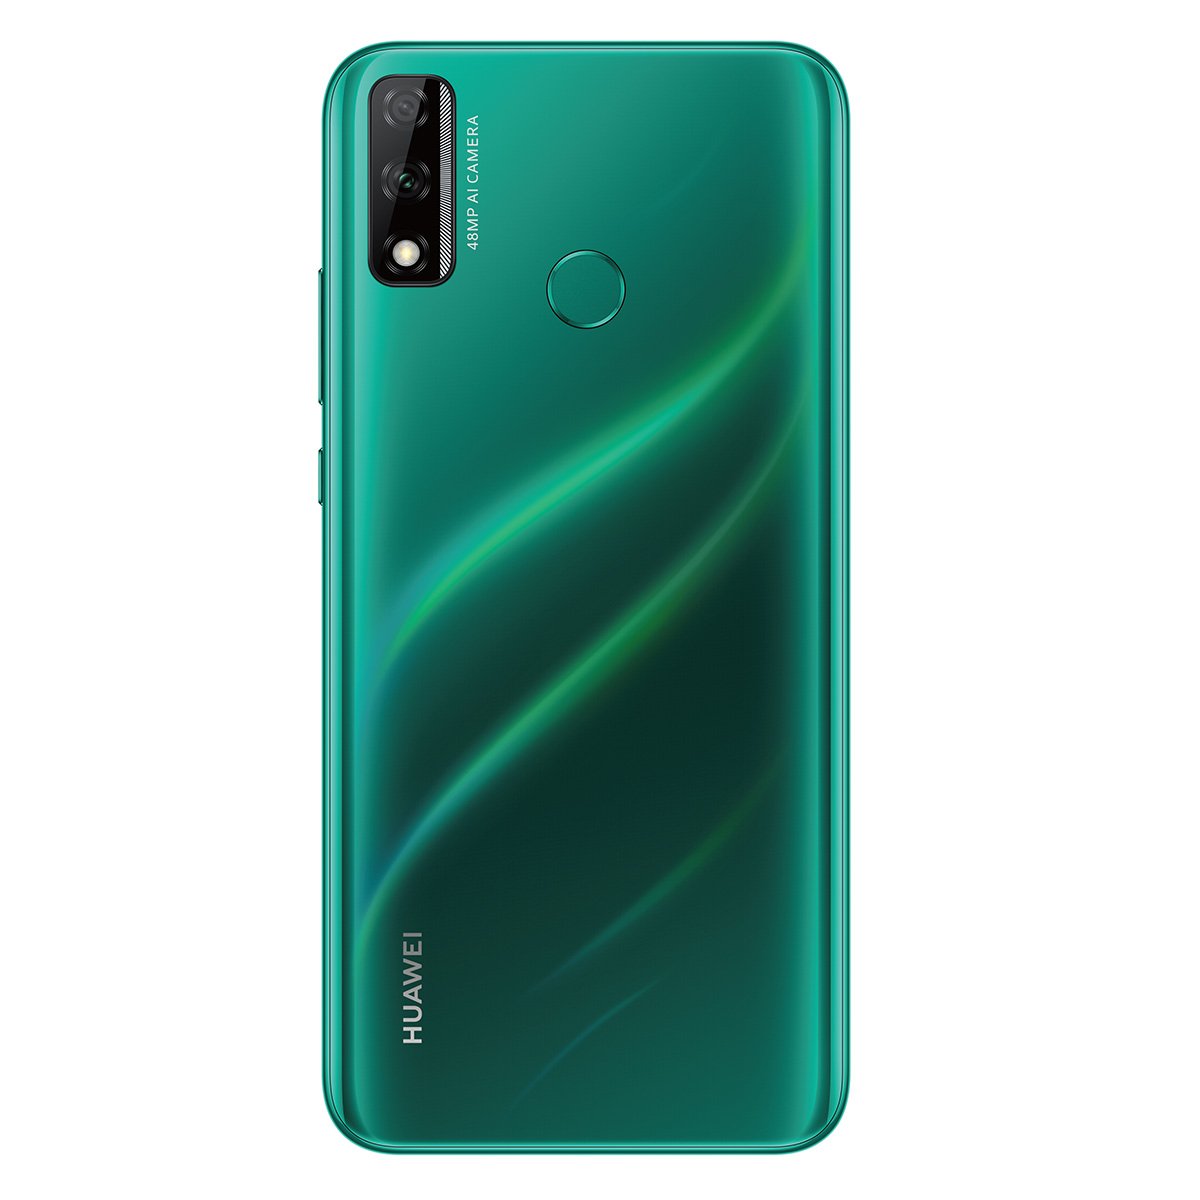 Celular Huawei Y8S Jkm-Lx3Y8S Color Verde R9 (Telcel)